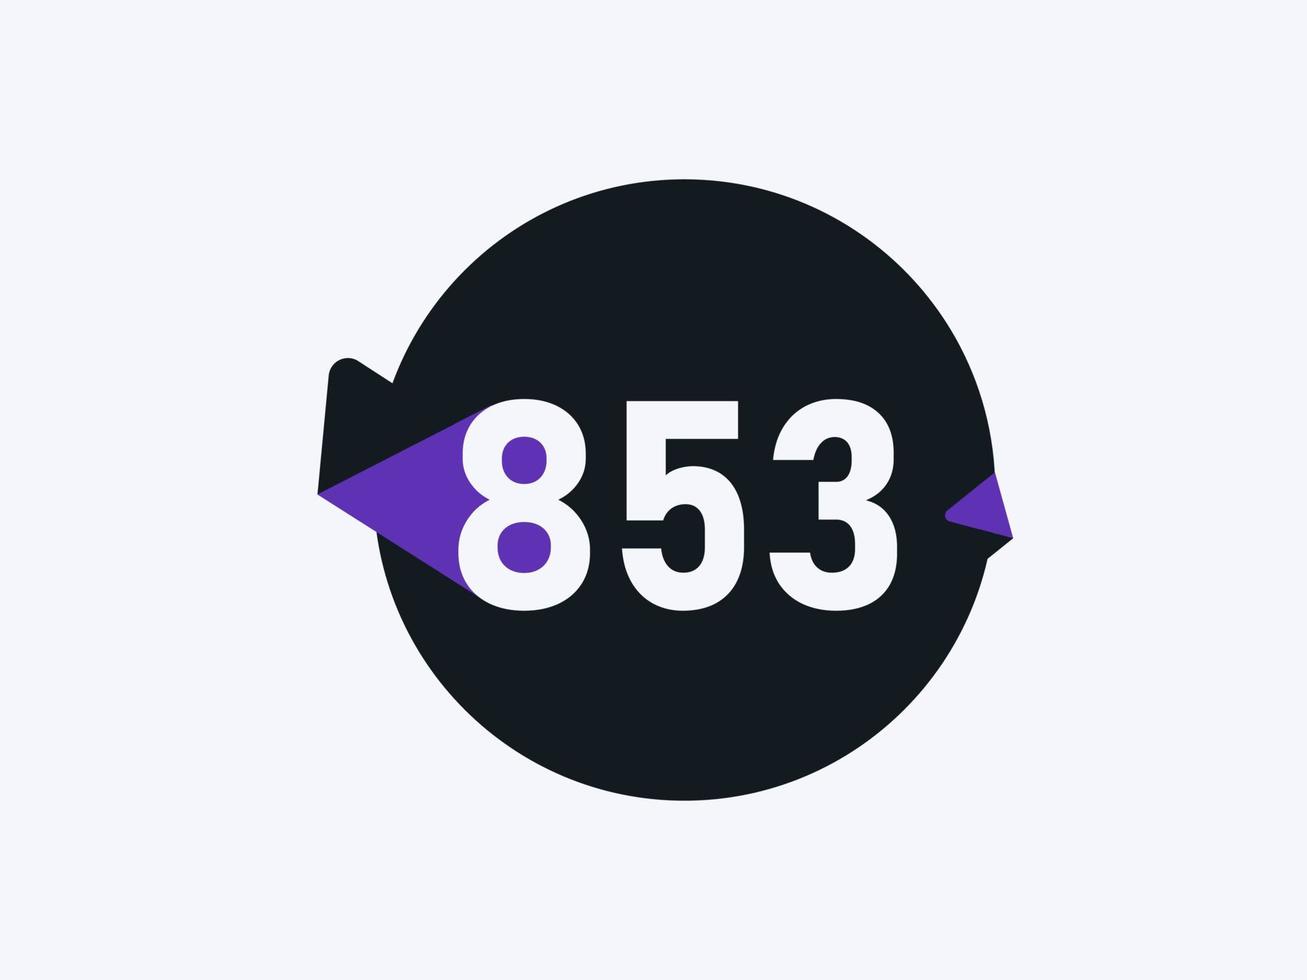 853 Number logo icon design vector image. Number logo icon design vector image